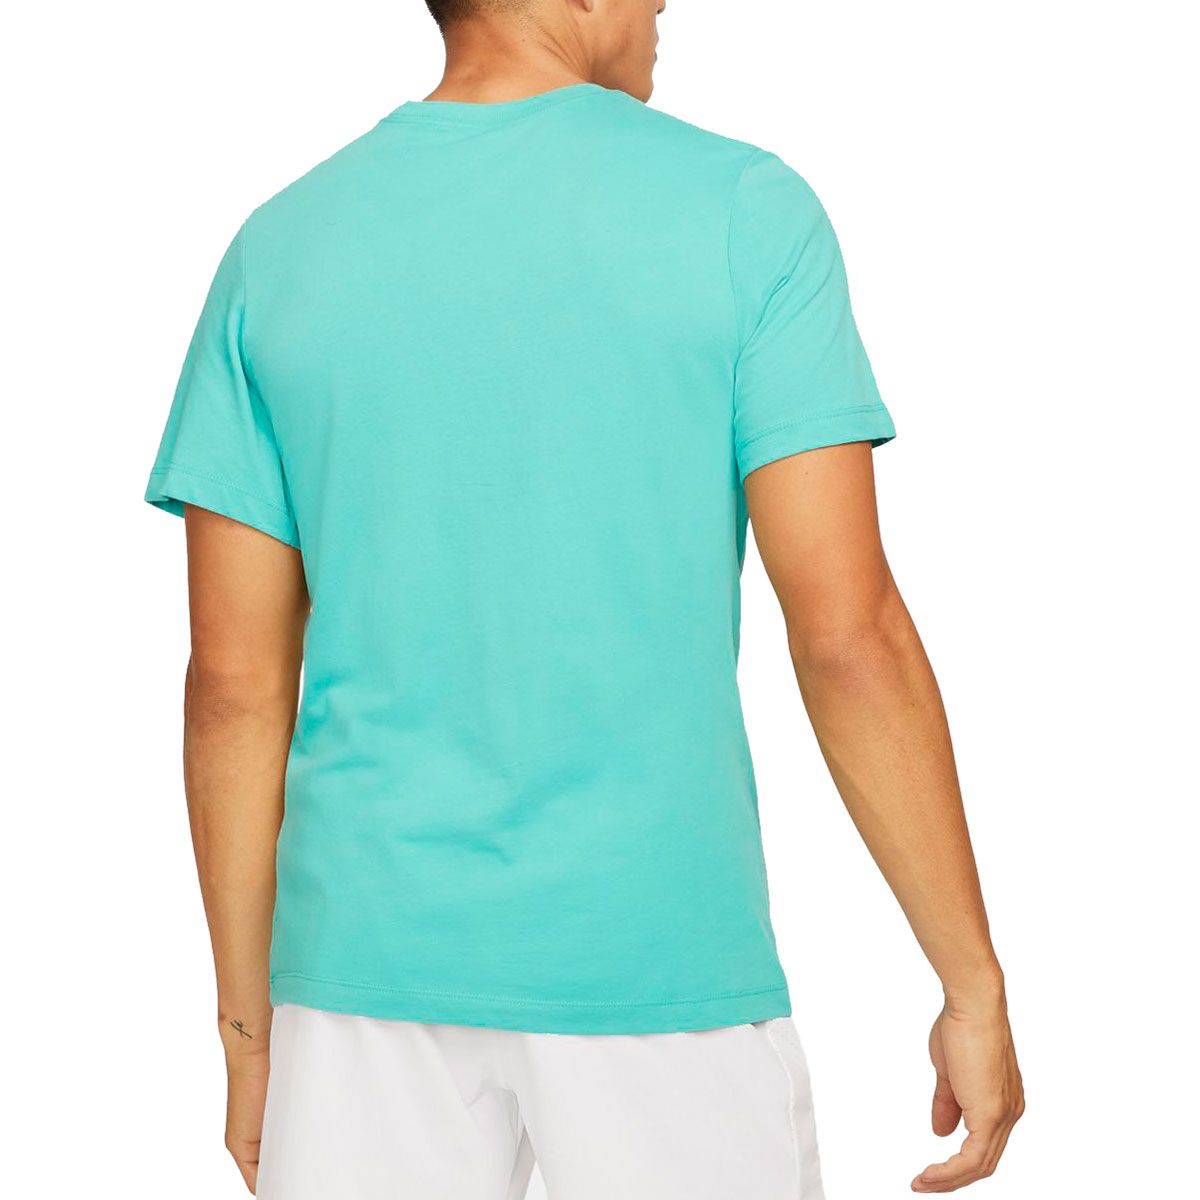 Tee Shirt Nike Court Rafa junior DD2304-451 – Ecosport Tennis